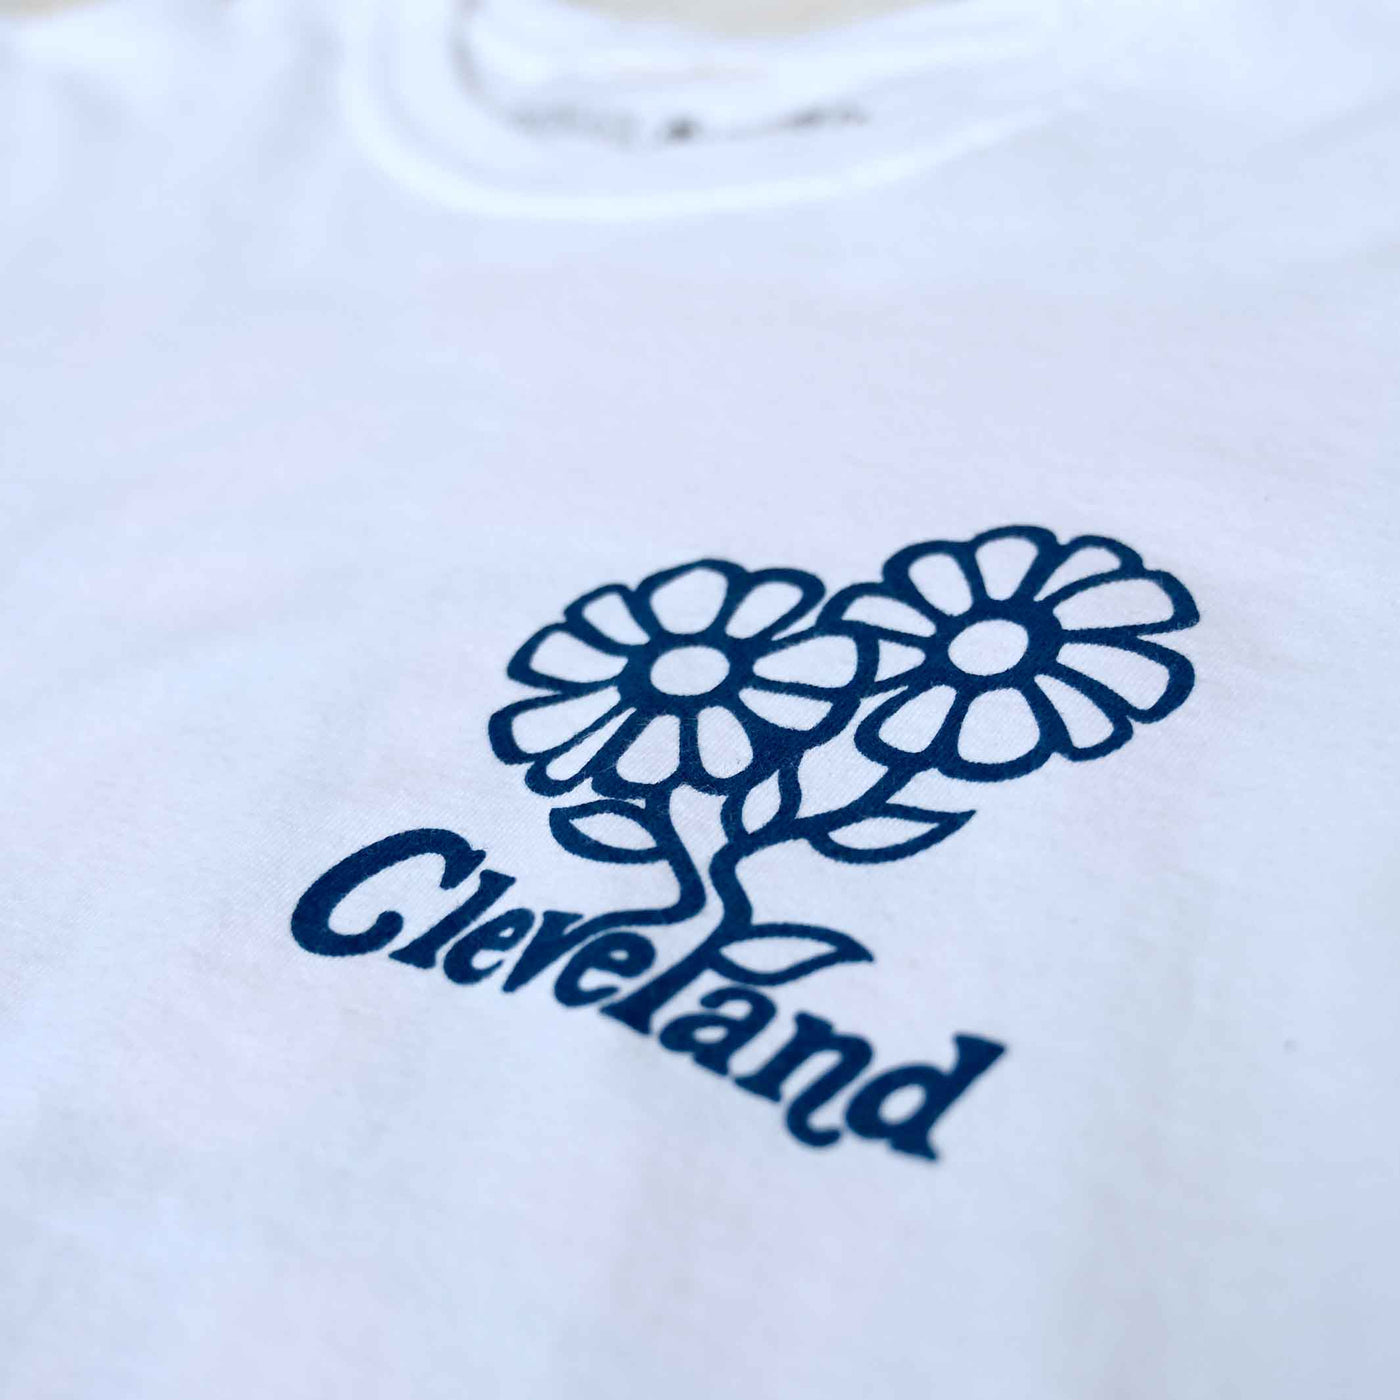 Cleveland Flowers - Crewneck T-Shirt